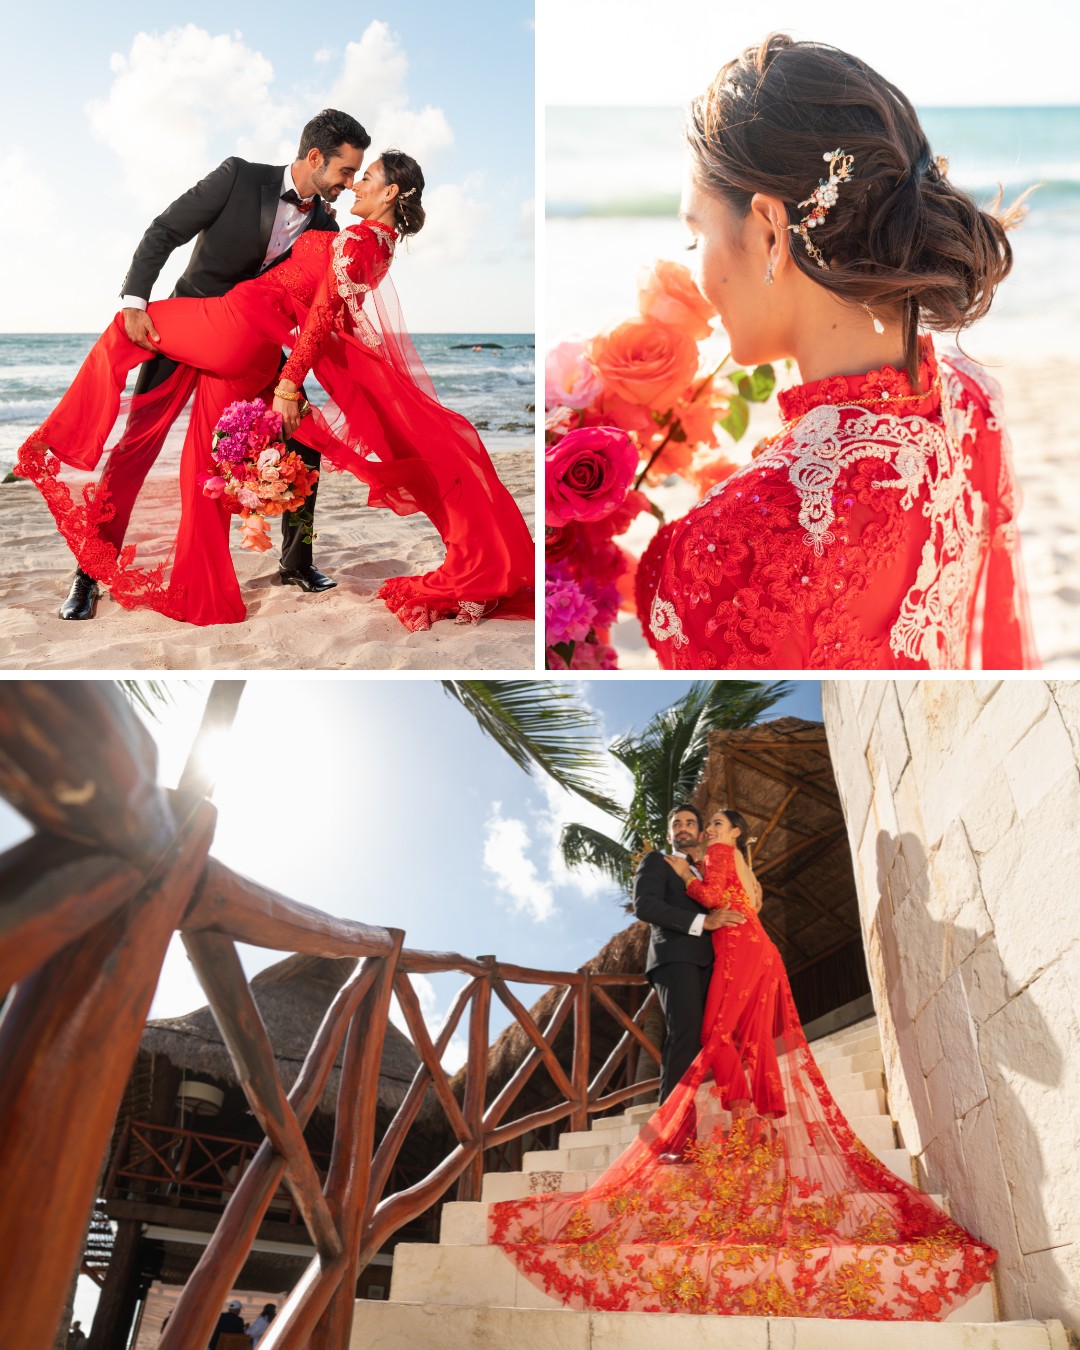 Bride in red dress on beach wedding